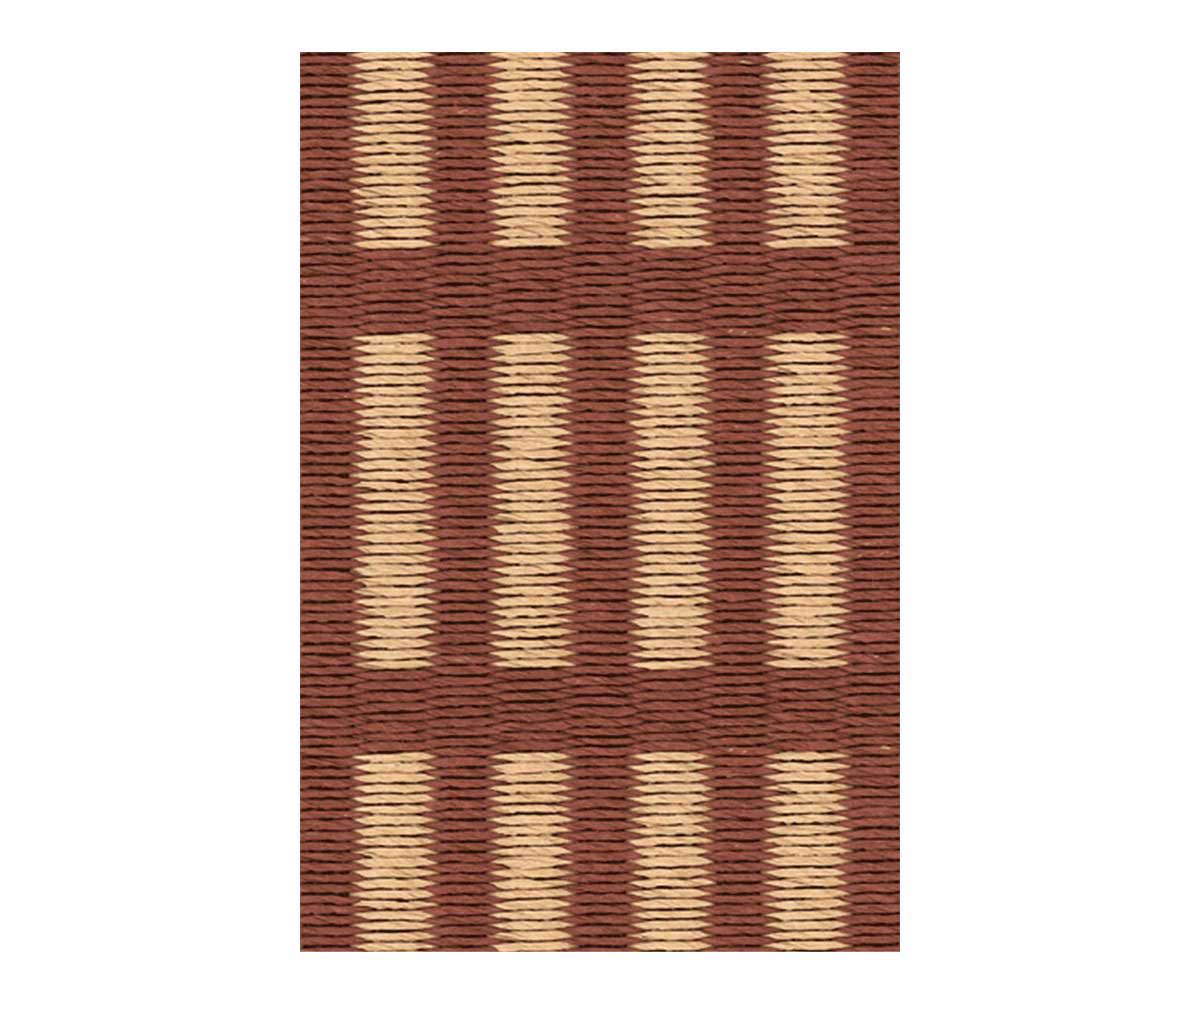 Woodnotes New York Rug Reddish Brown/Natural, 170 x 240 cm